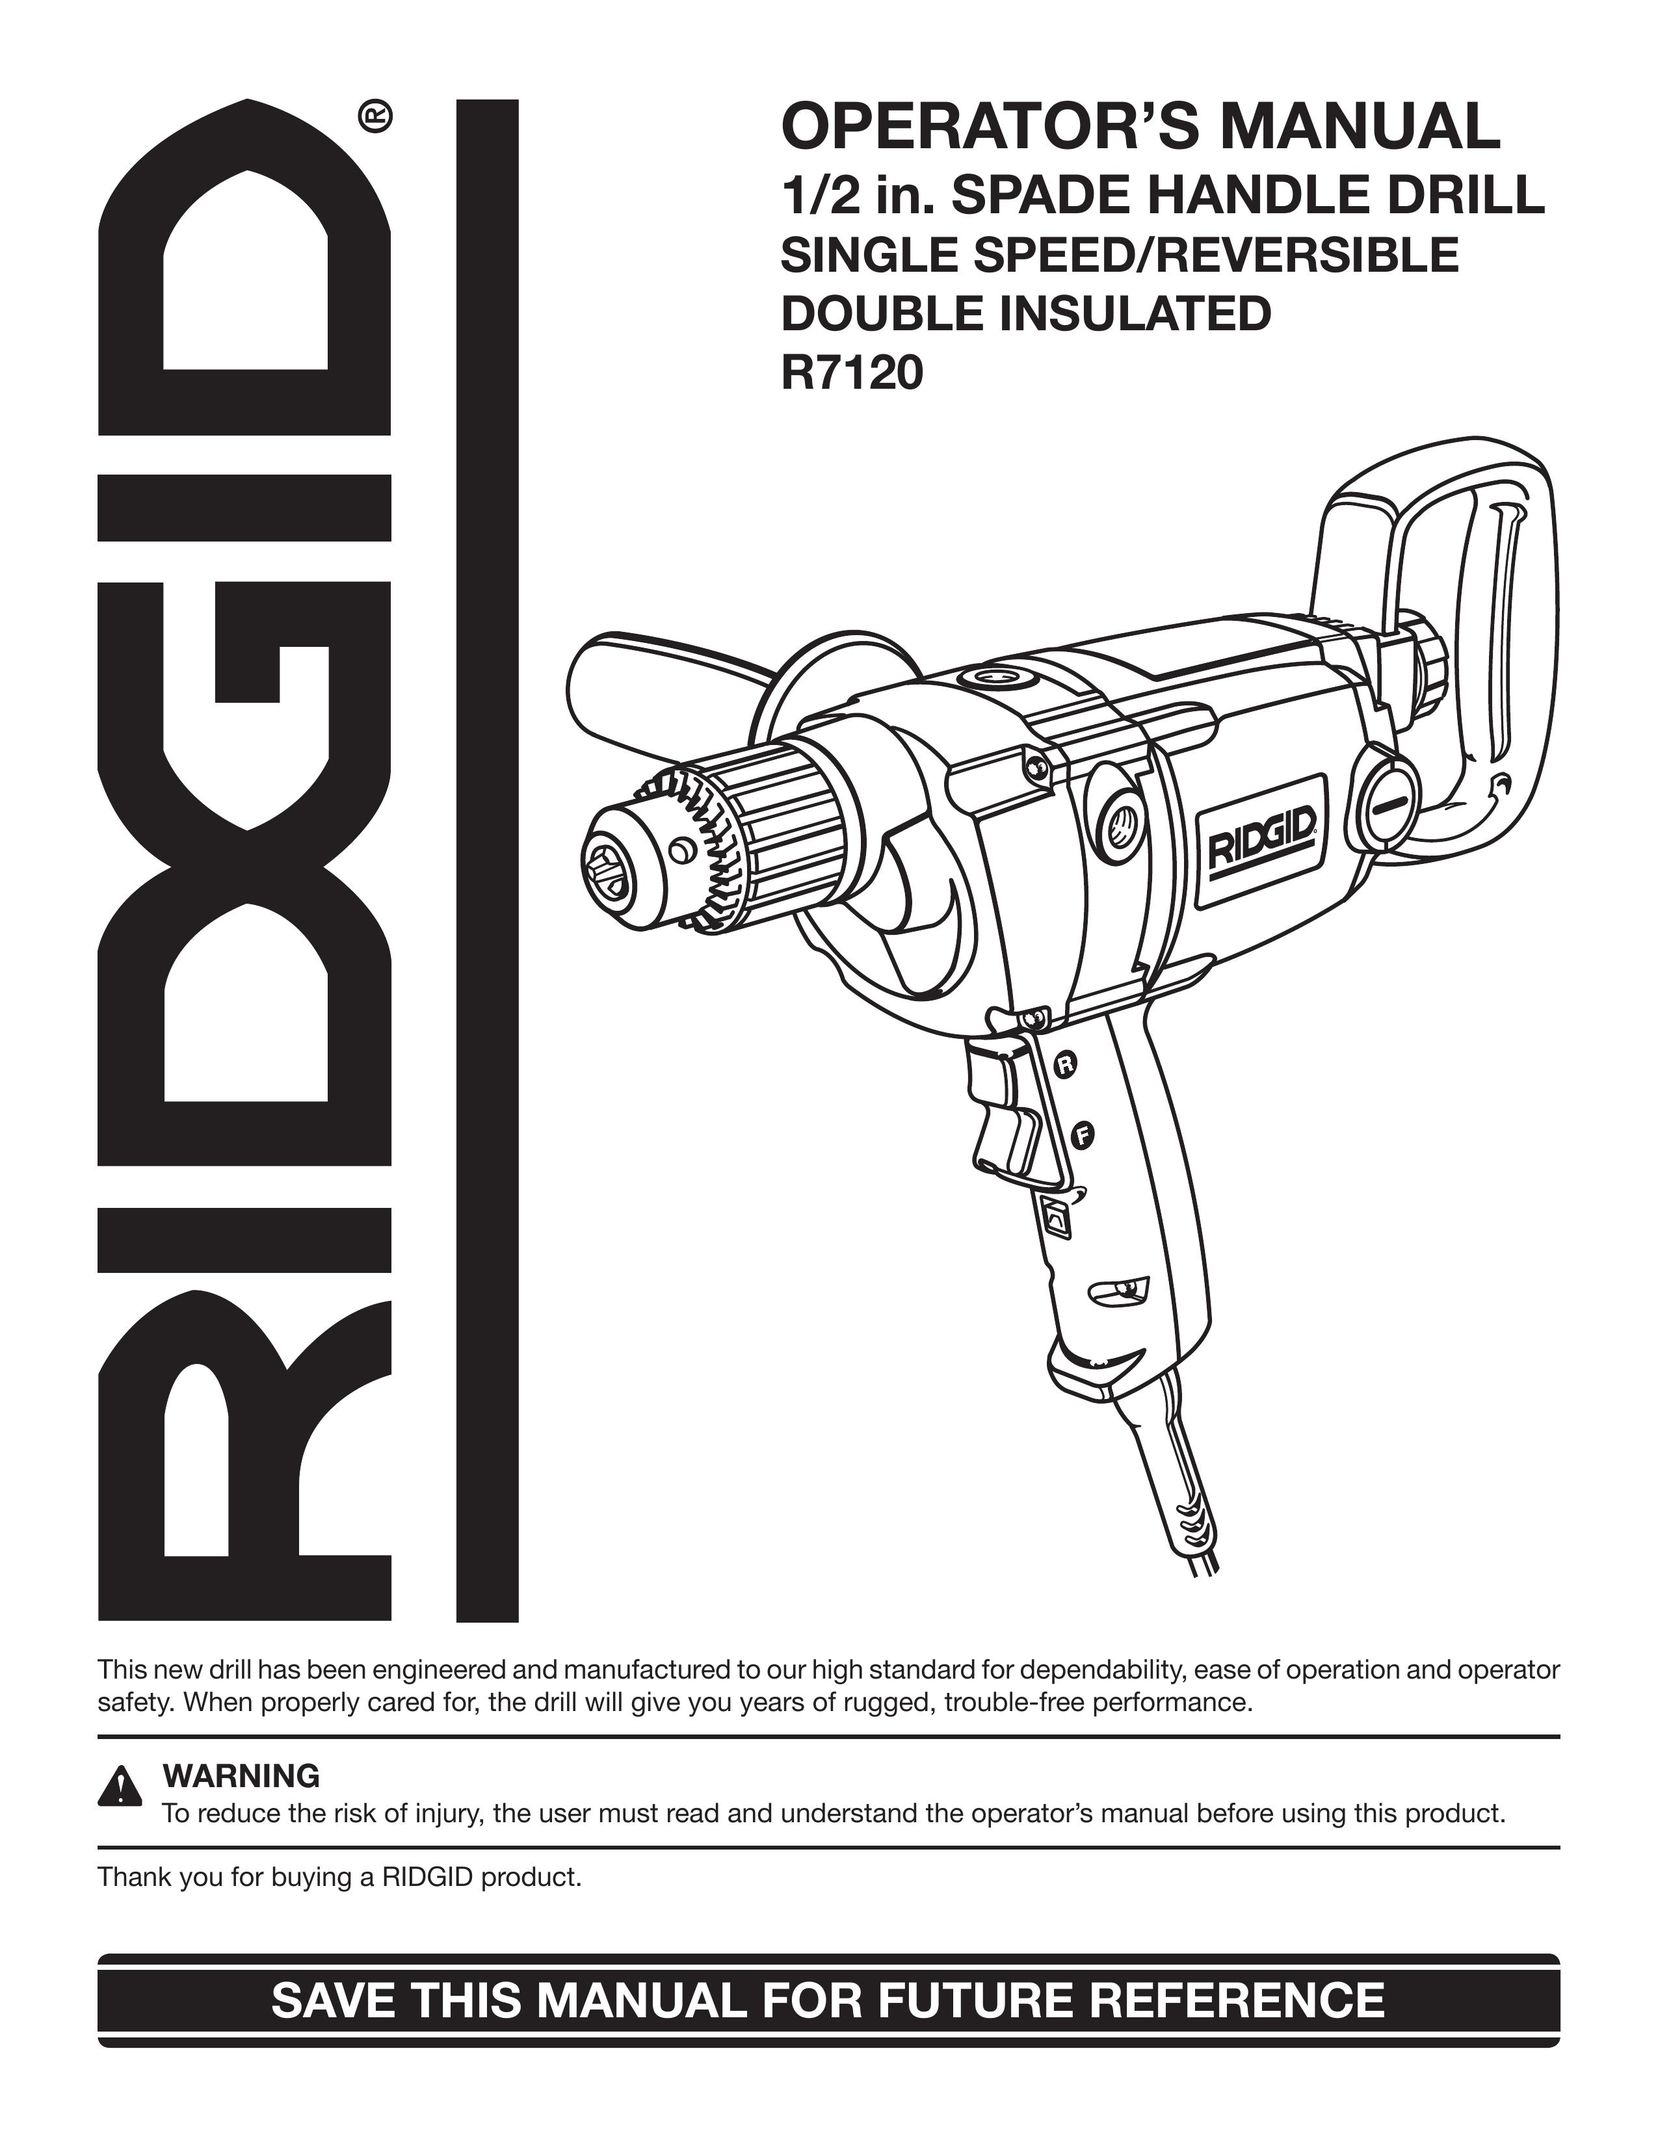 RIDGID R7120 Drill User Manual